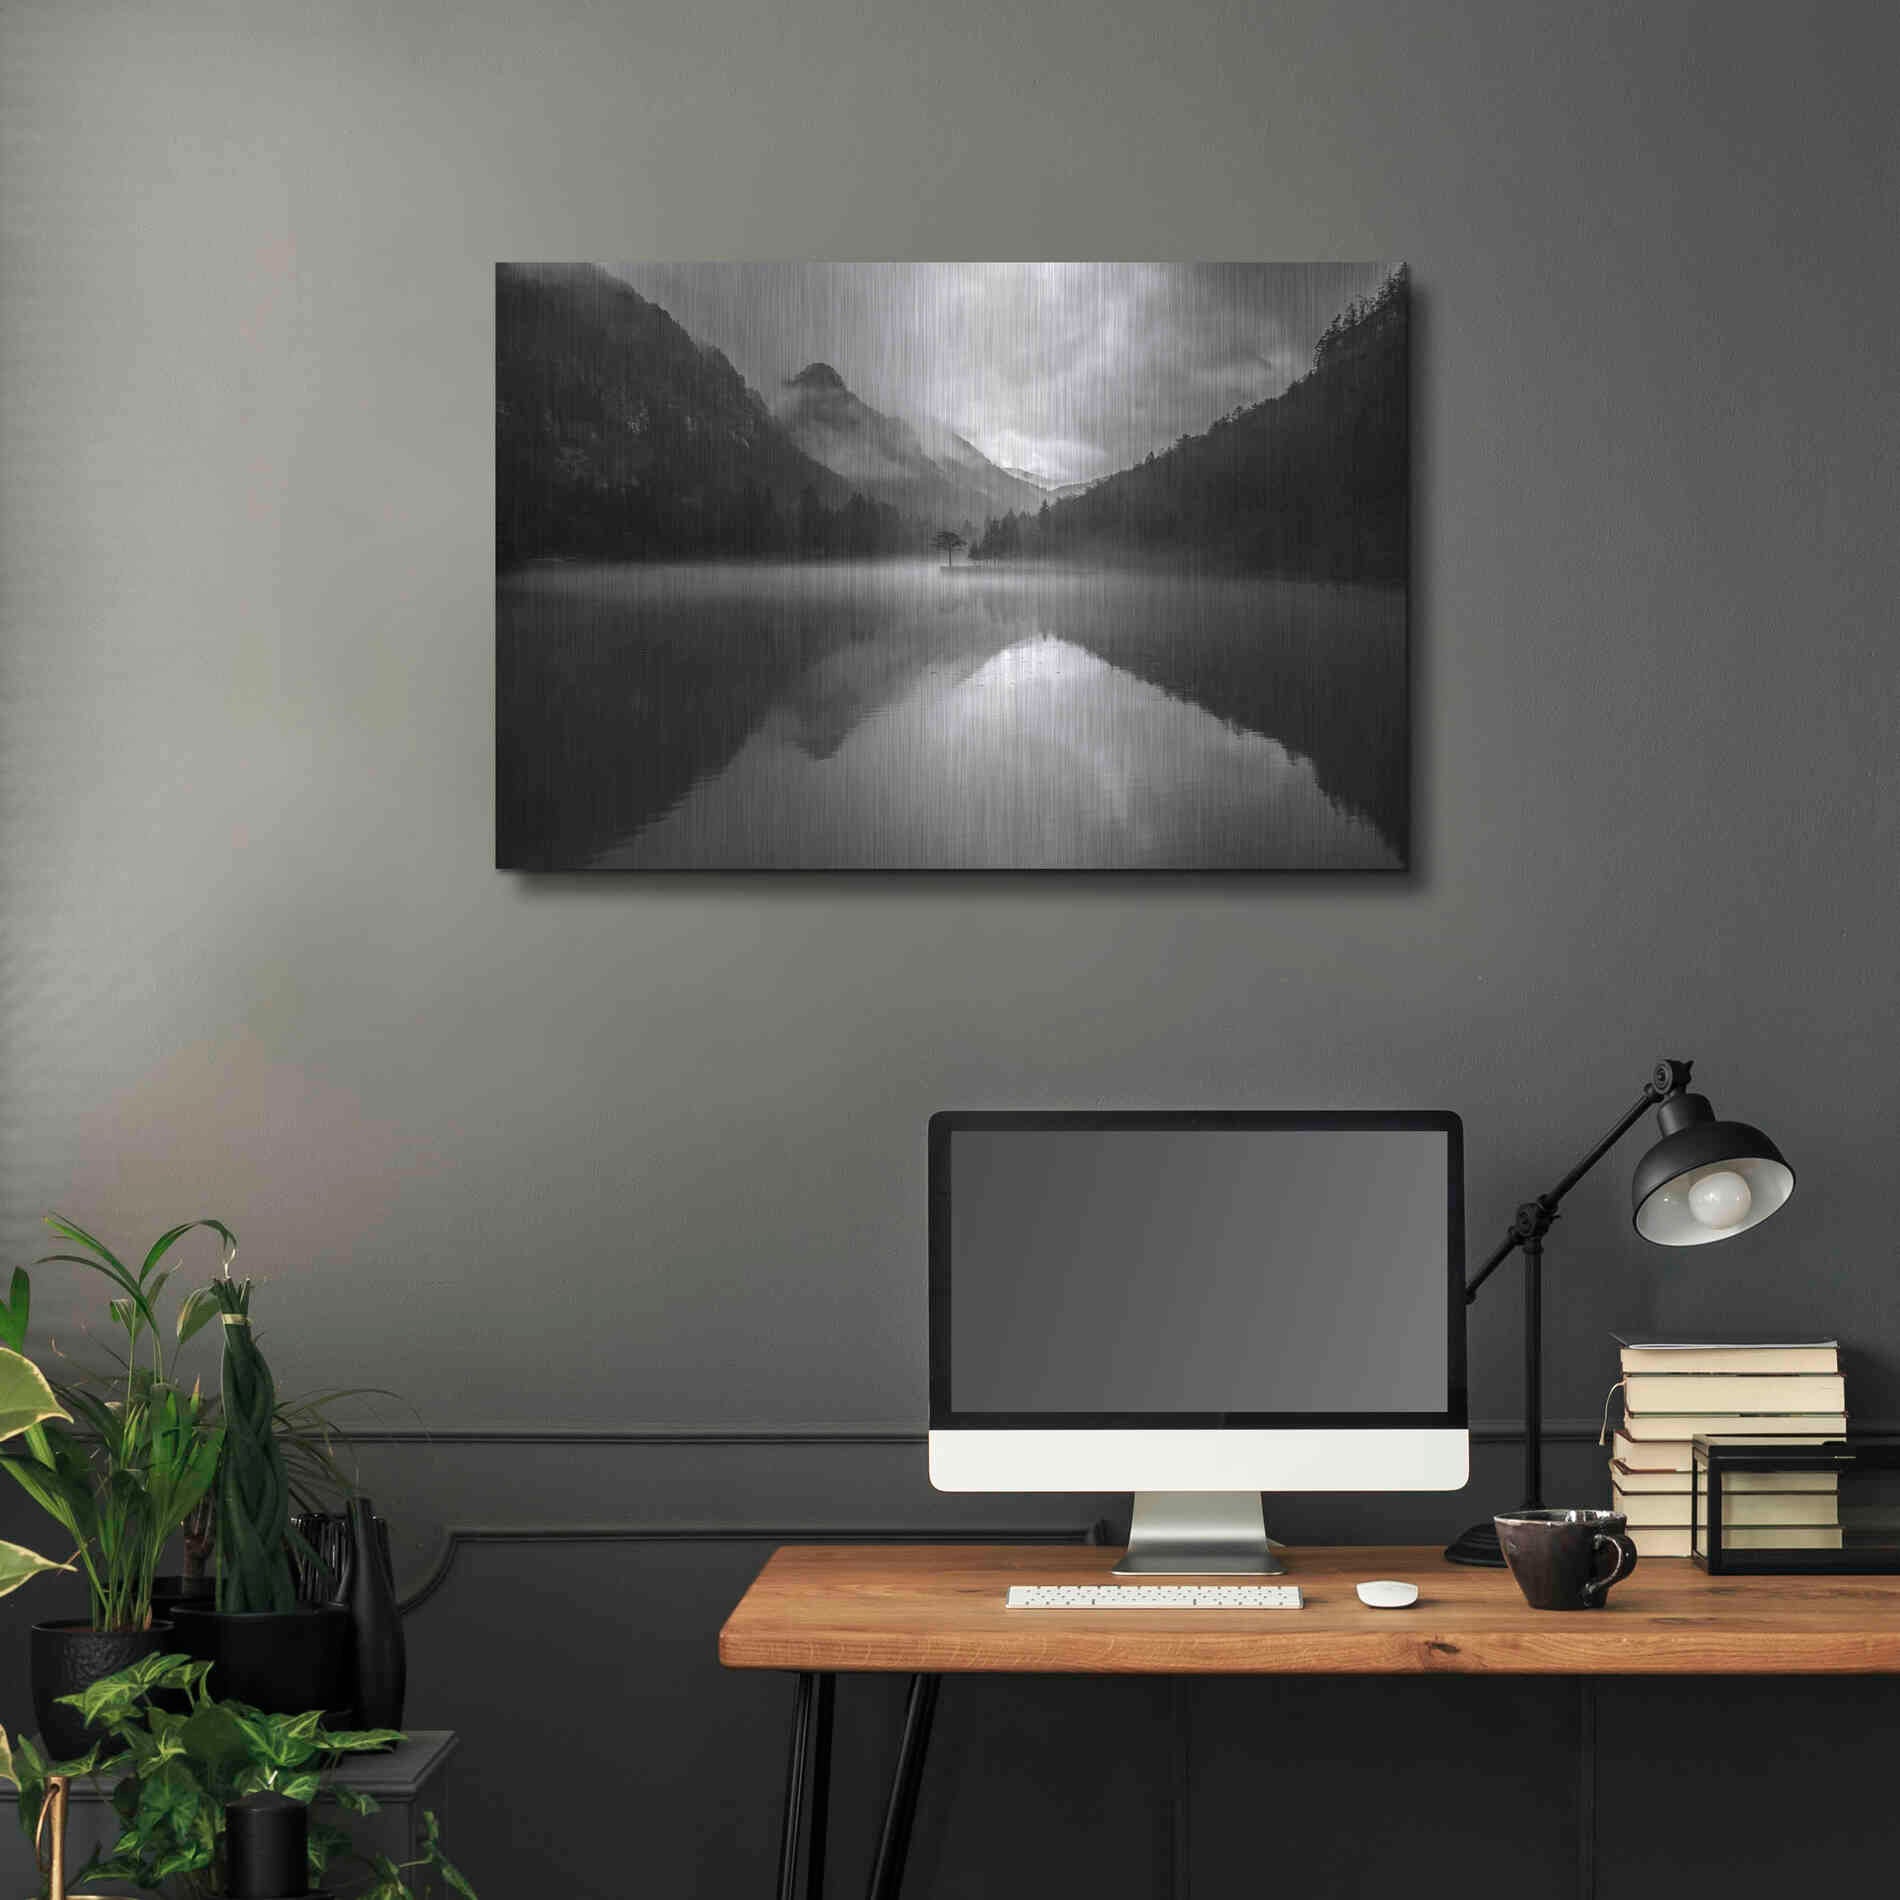 Luxe Metal Art 'Mountain Lake' by Design Fabrikken, Metal Wall Art,36x24